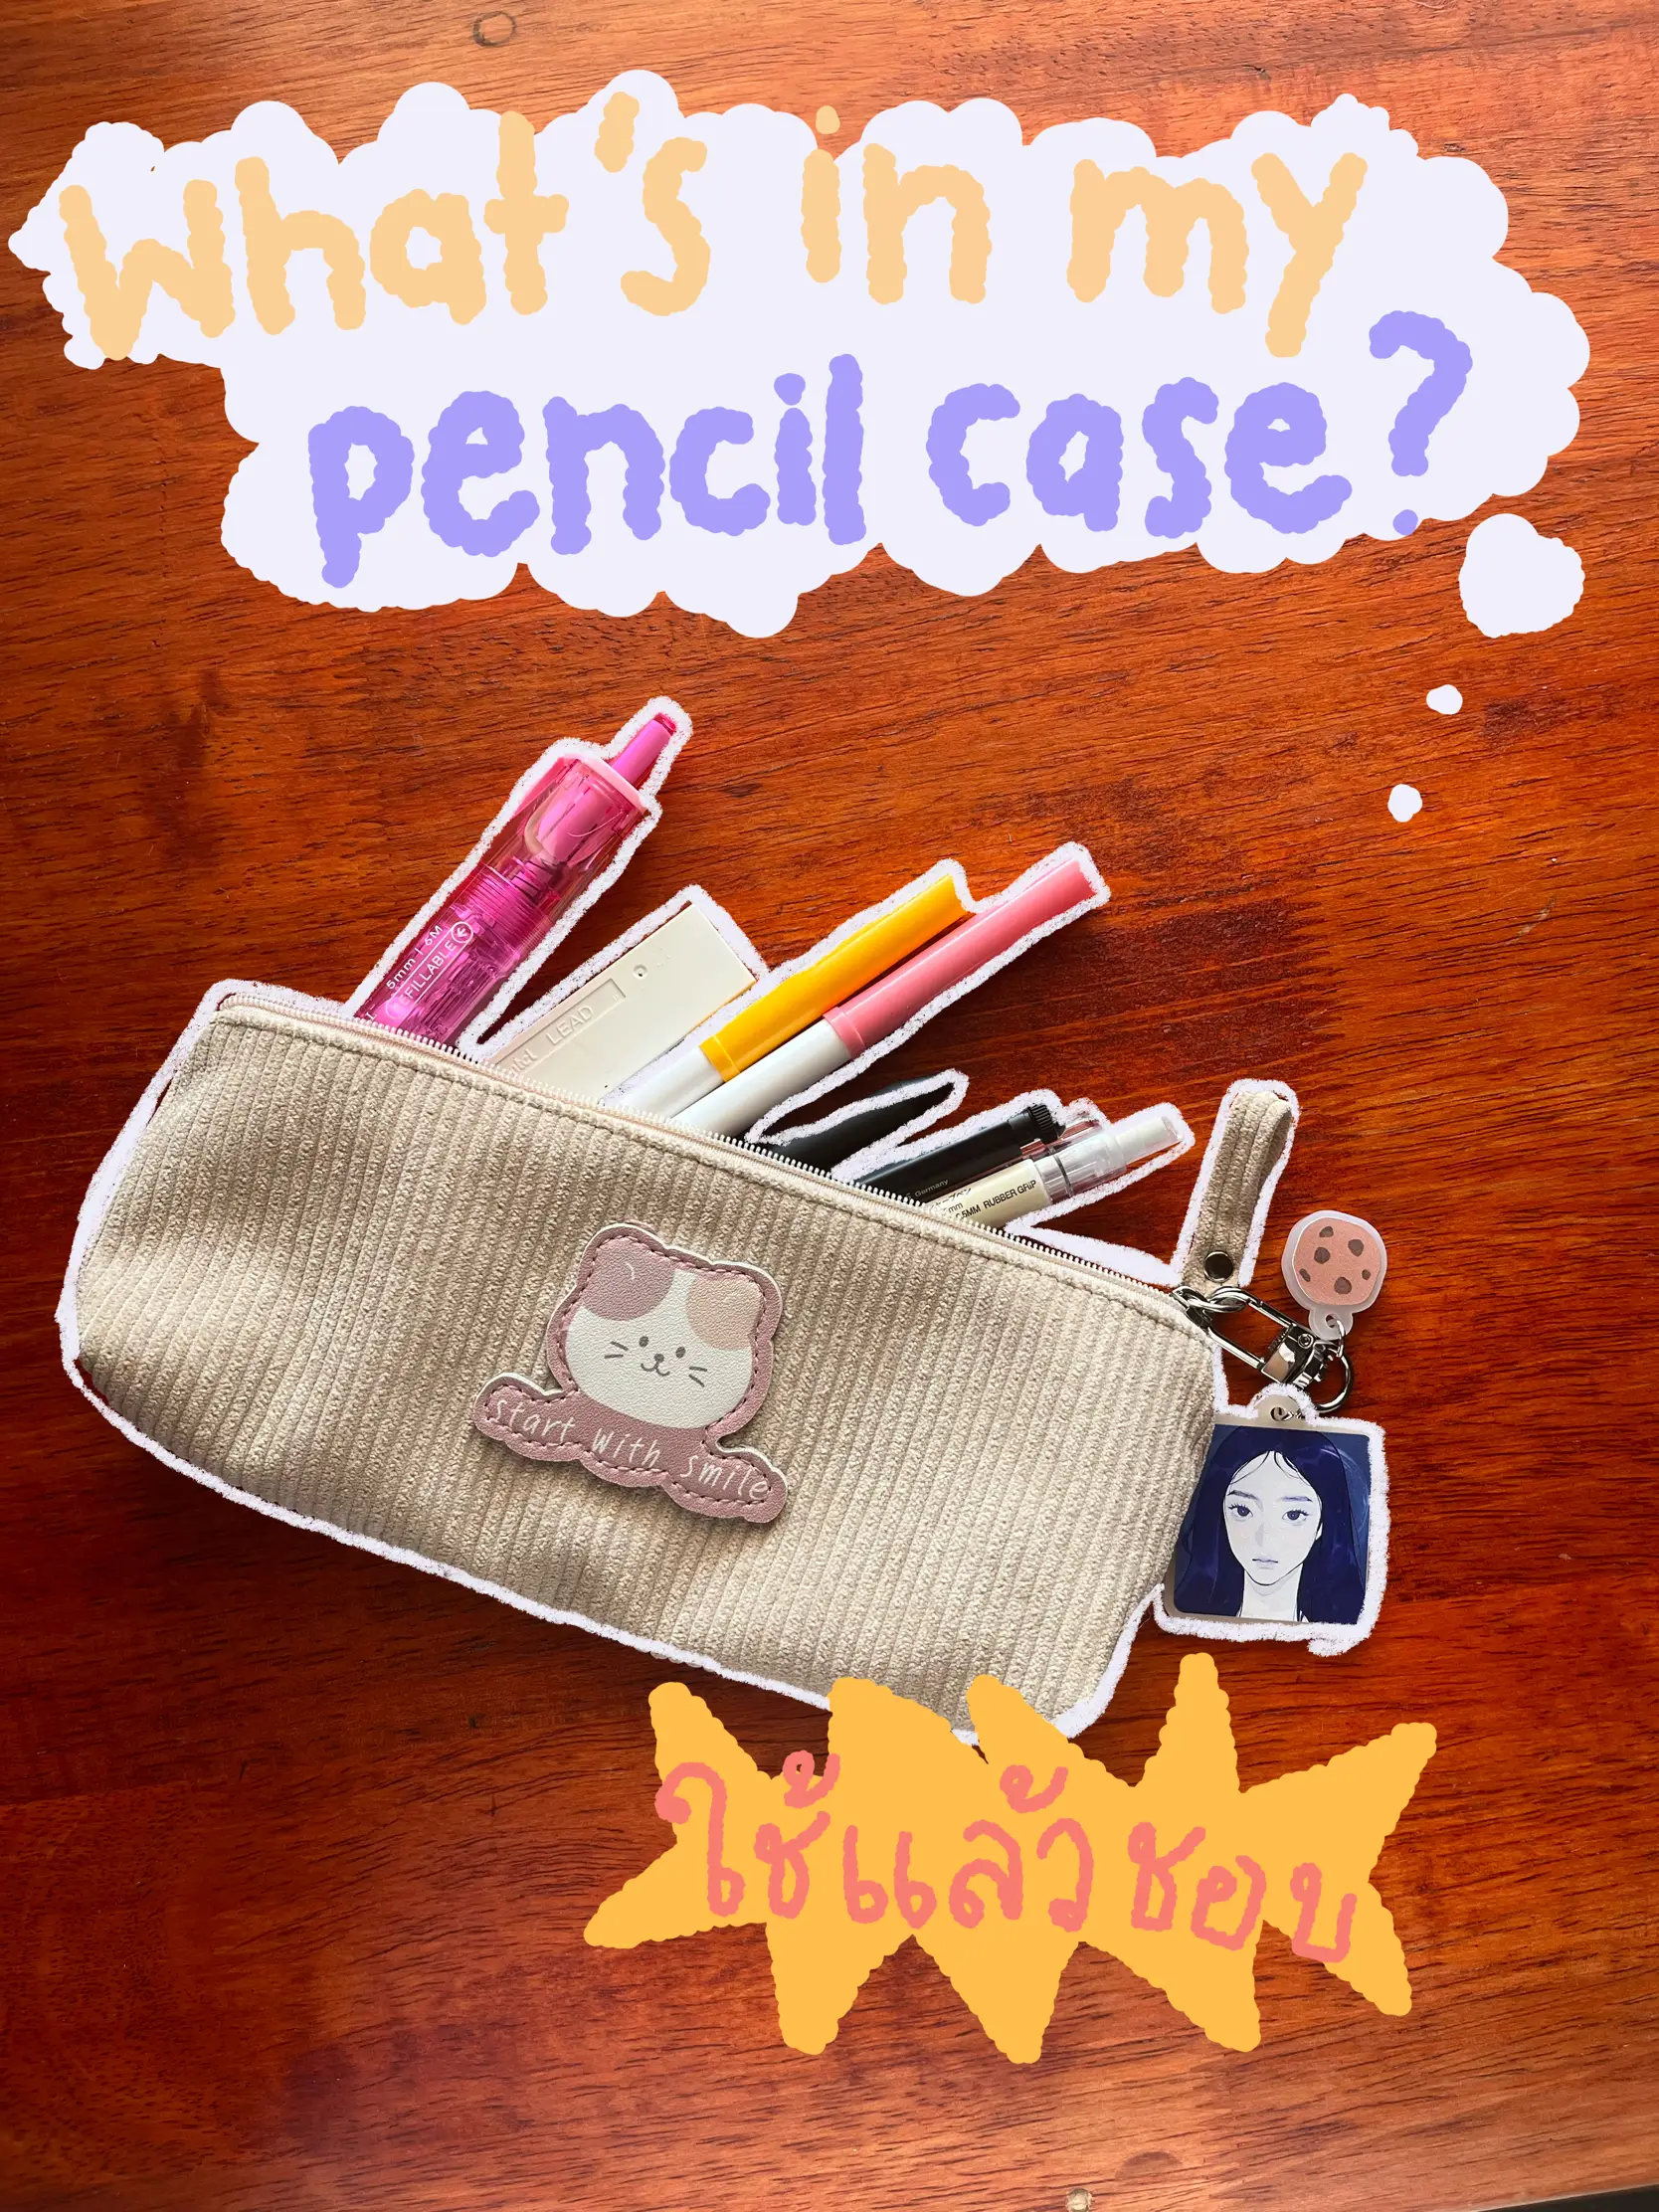 taylor swift pencil case - Lemon8 Search